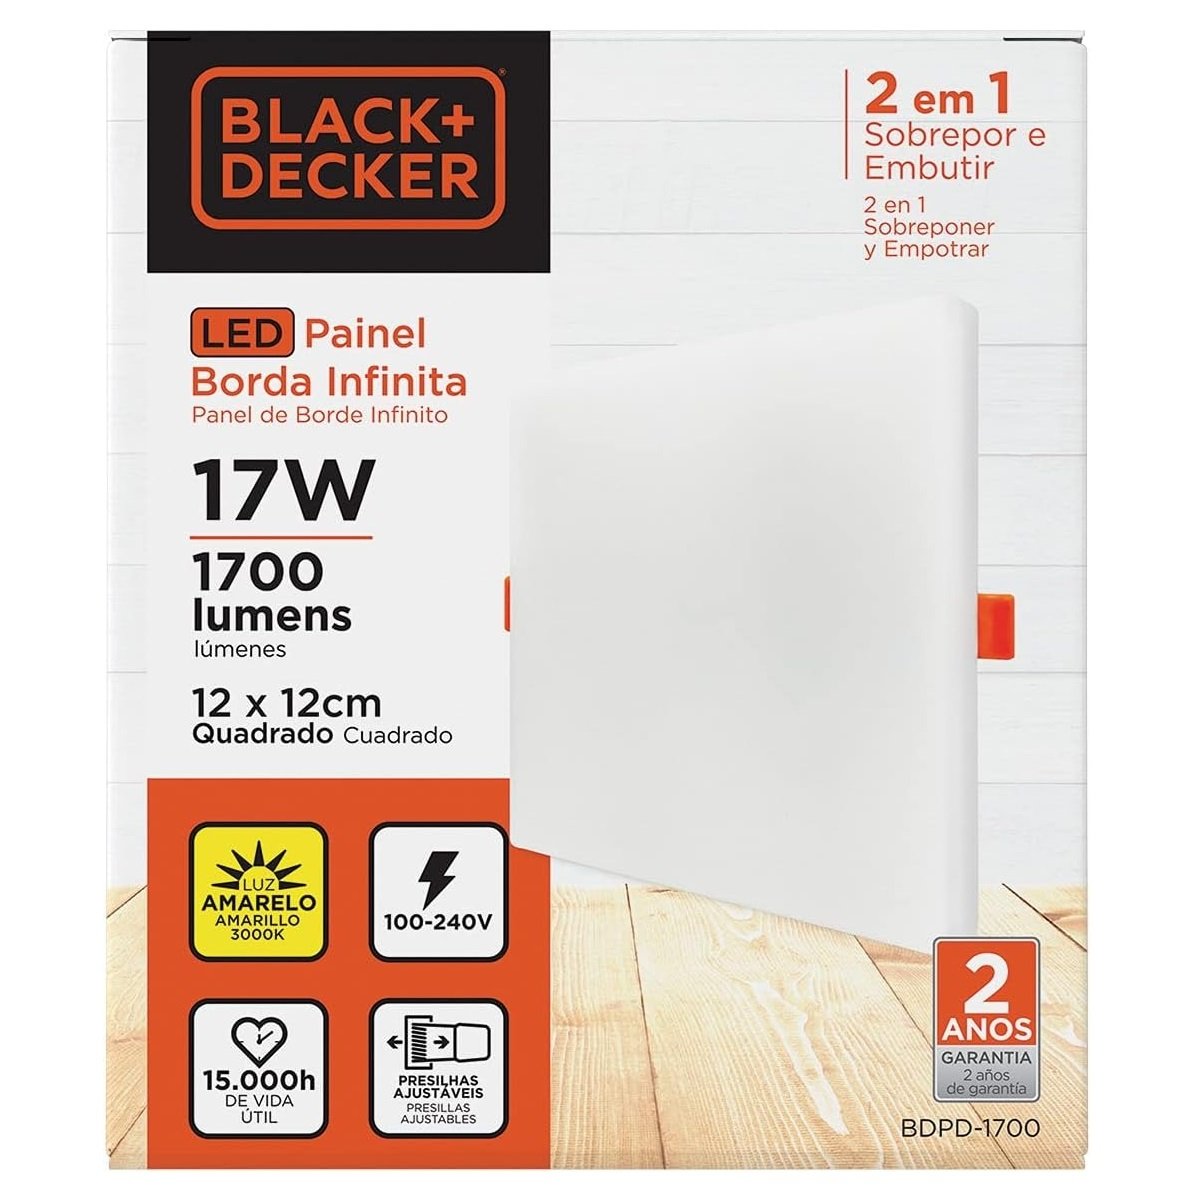 Painel Led 2x1 17w Borda Infinita Quadrado 3000k 100-240v Black+decker - 4